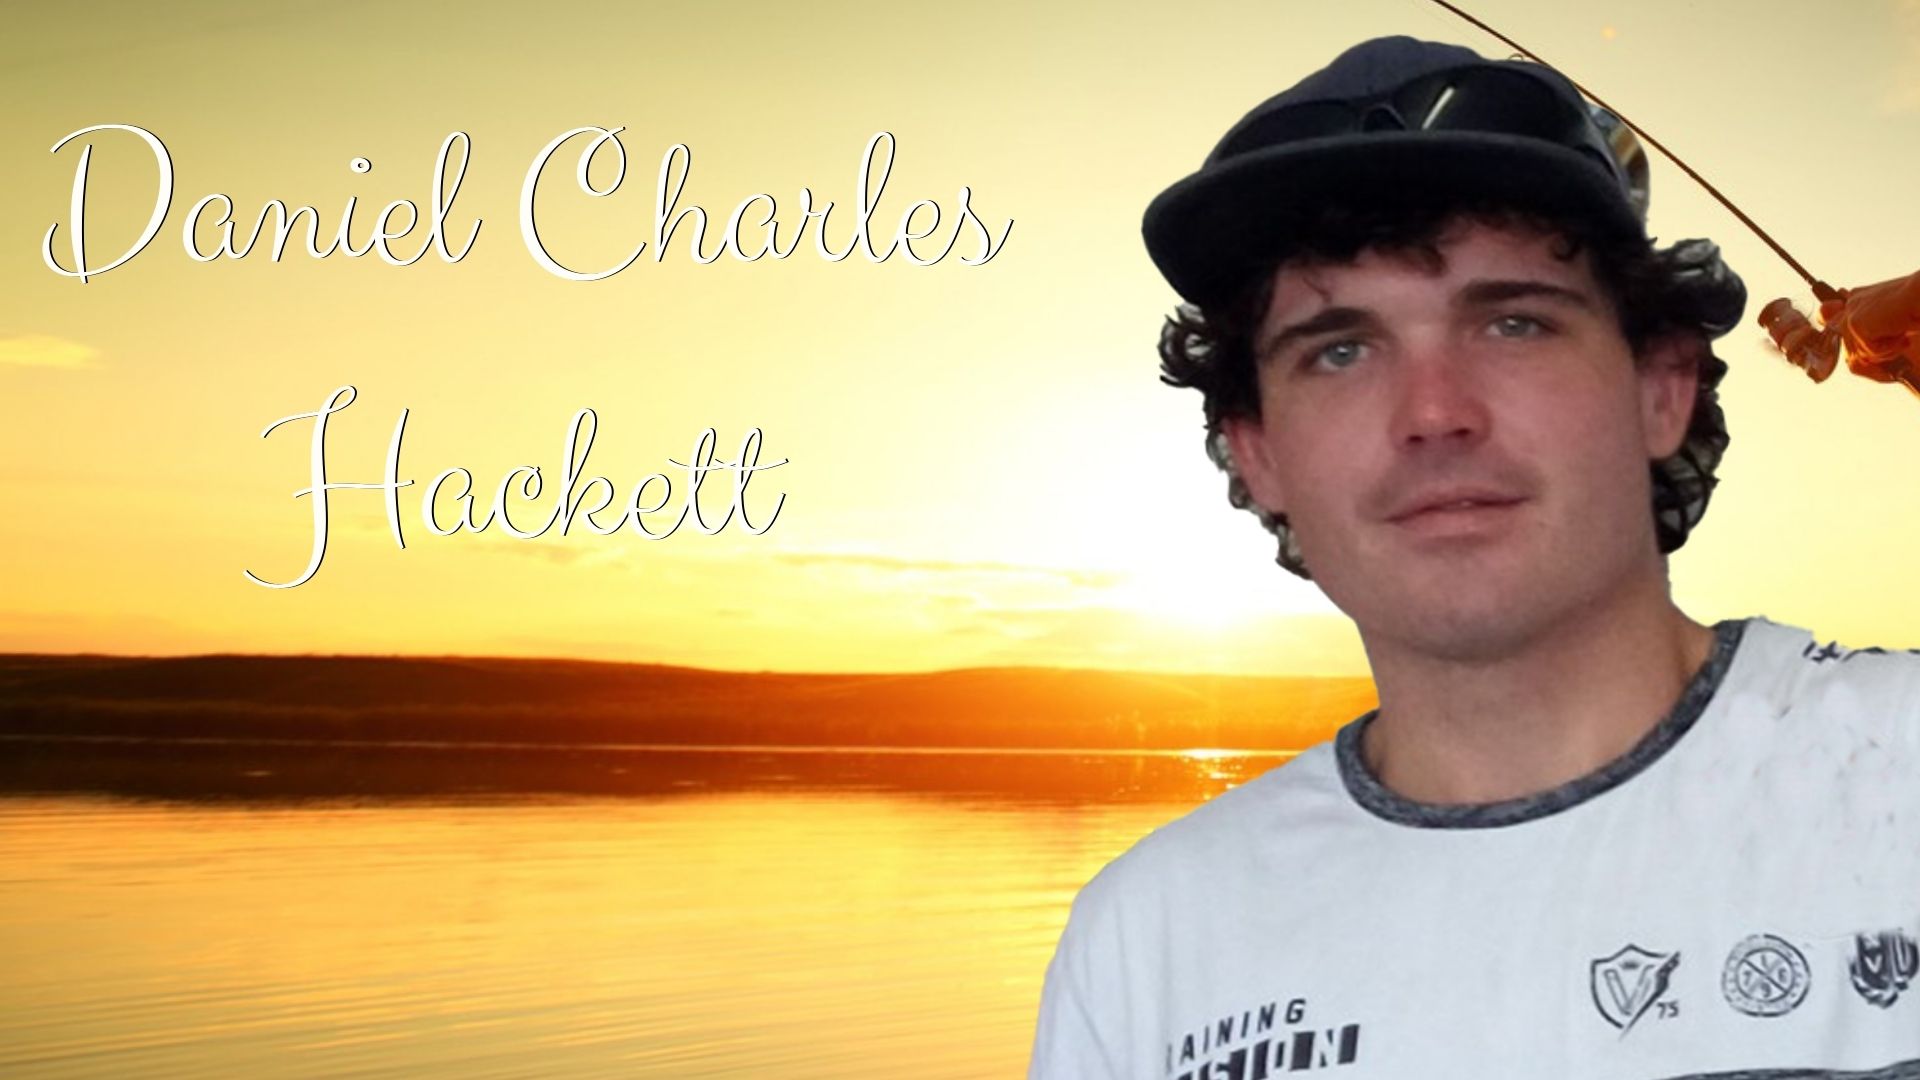 Daniel Charles Hackett